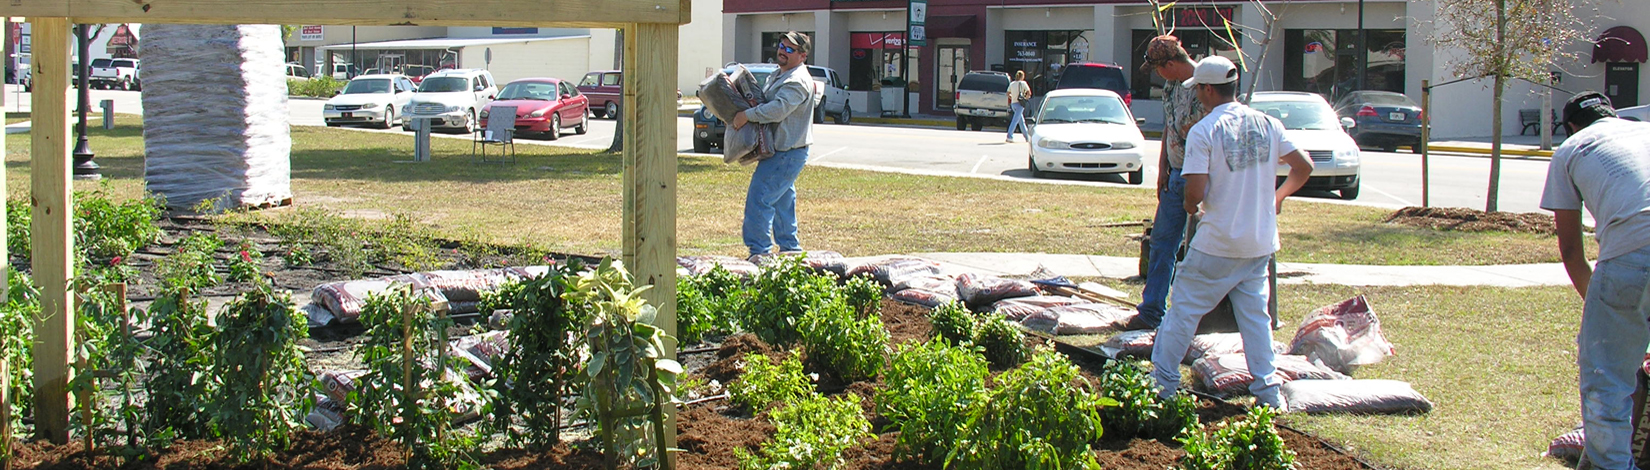 Professional landscapers apply mulch to a public park site in Okeechobee, Fla.